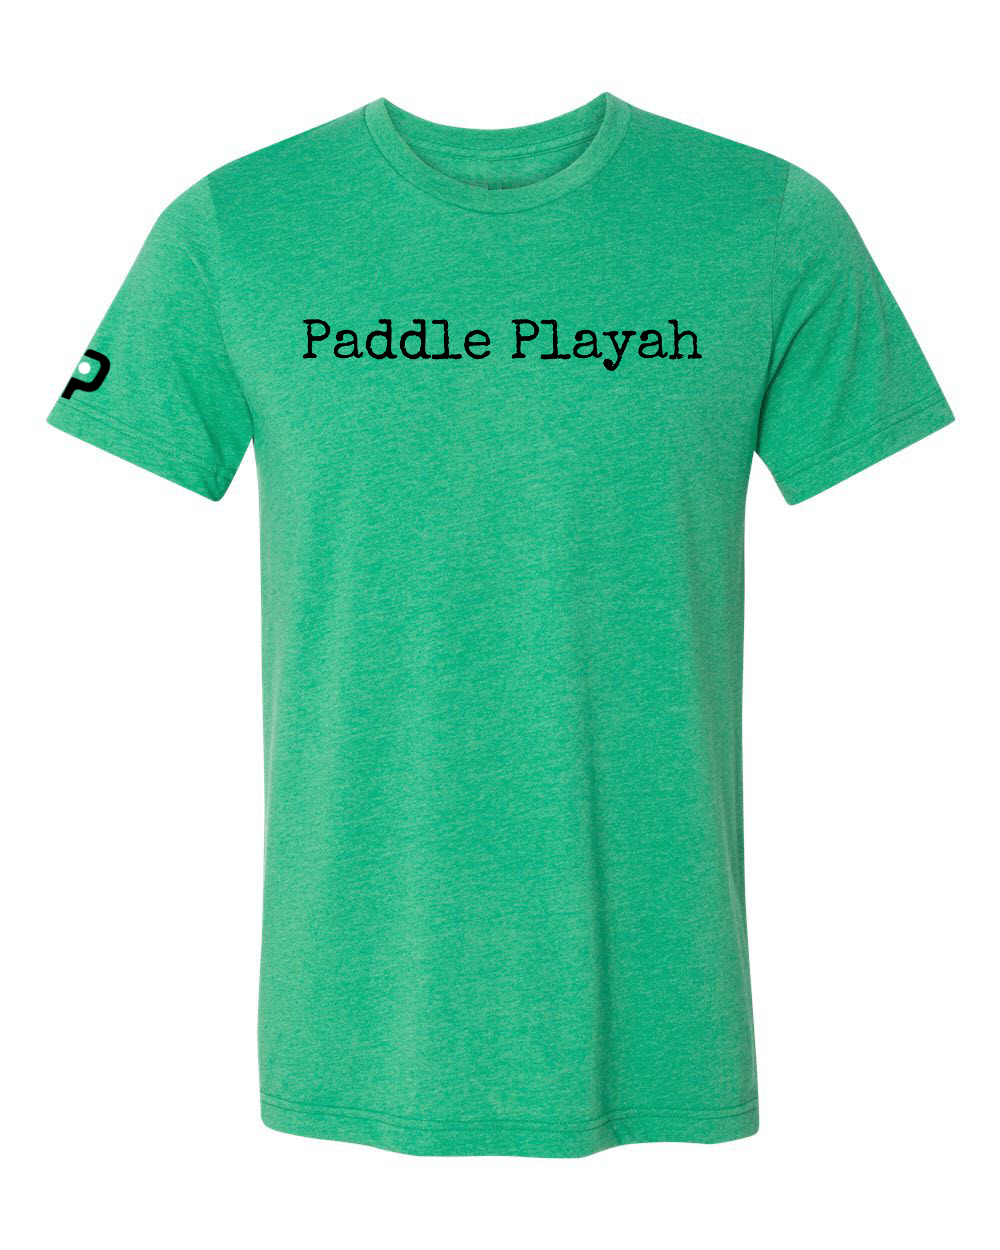 "Paddle Playah" Classic T-Shirt